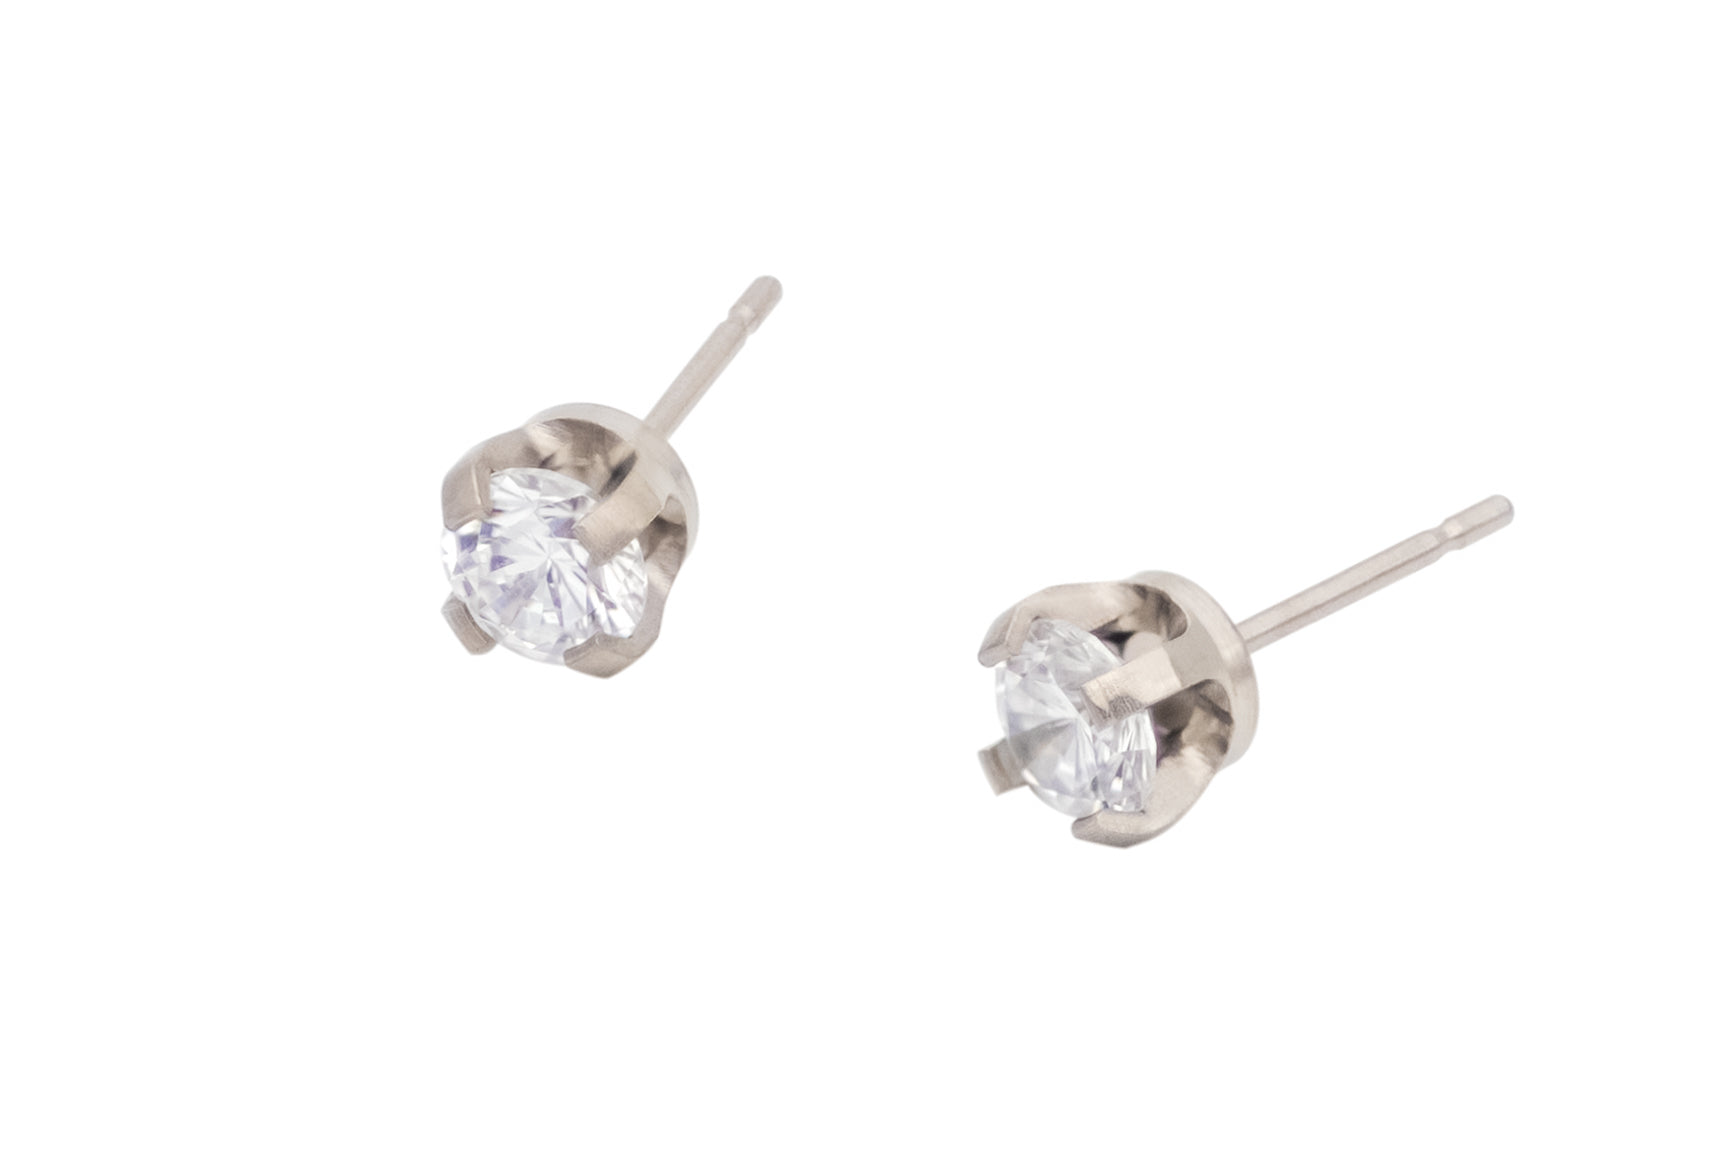 Pure Titanium Earrings Cubic Zirconia Facet Cut Hypoallergenic Nickel Free Studs Long Length Post